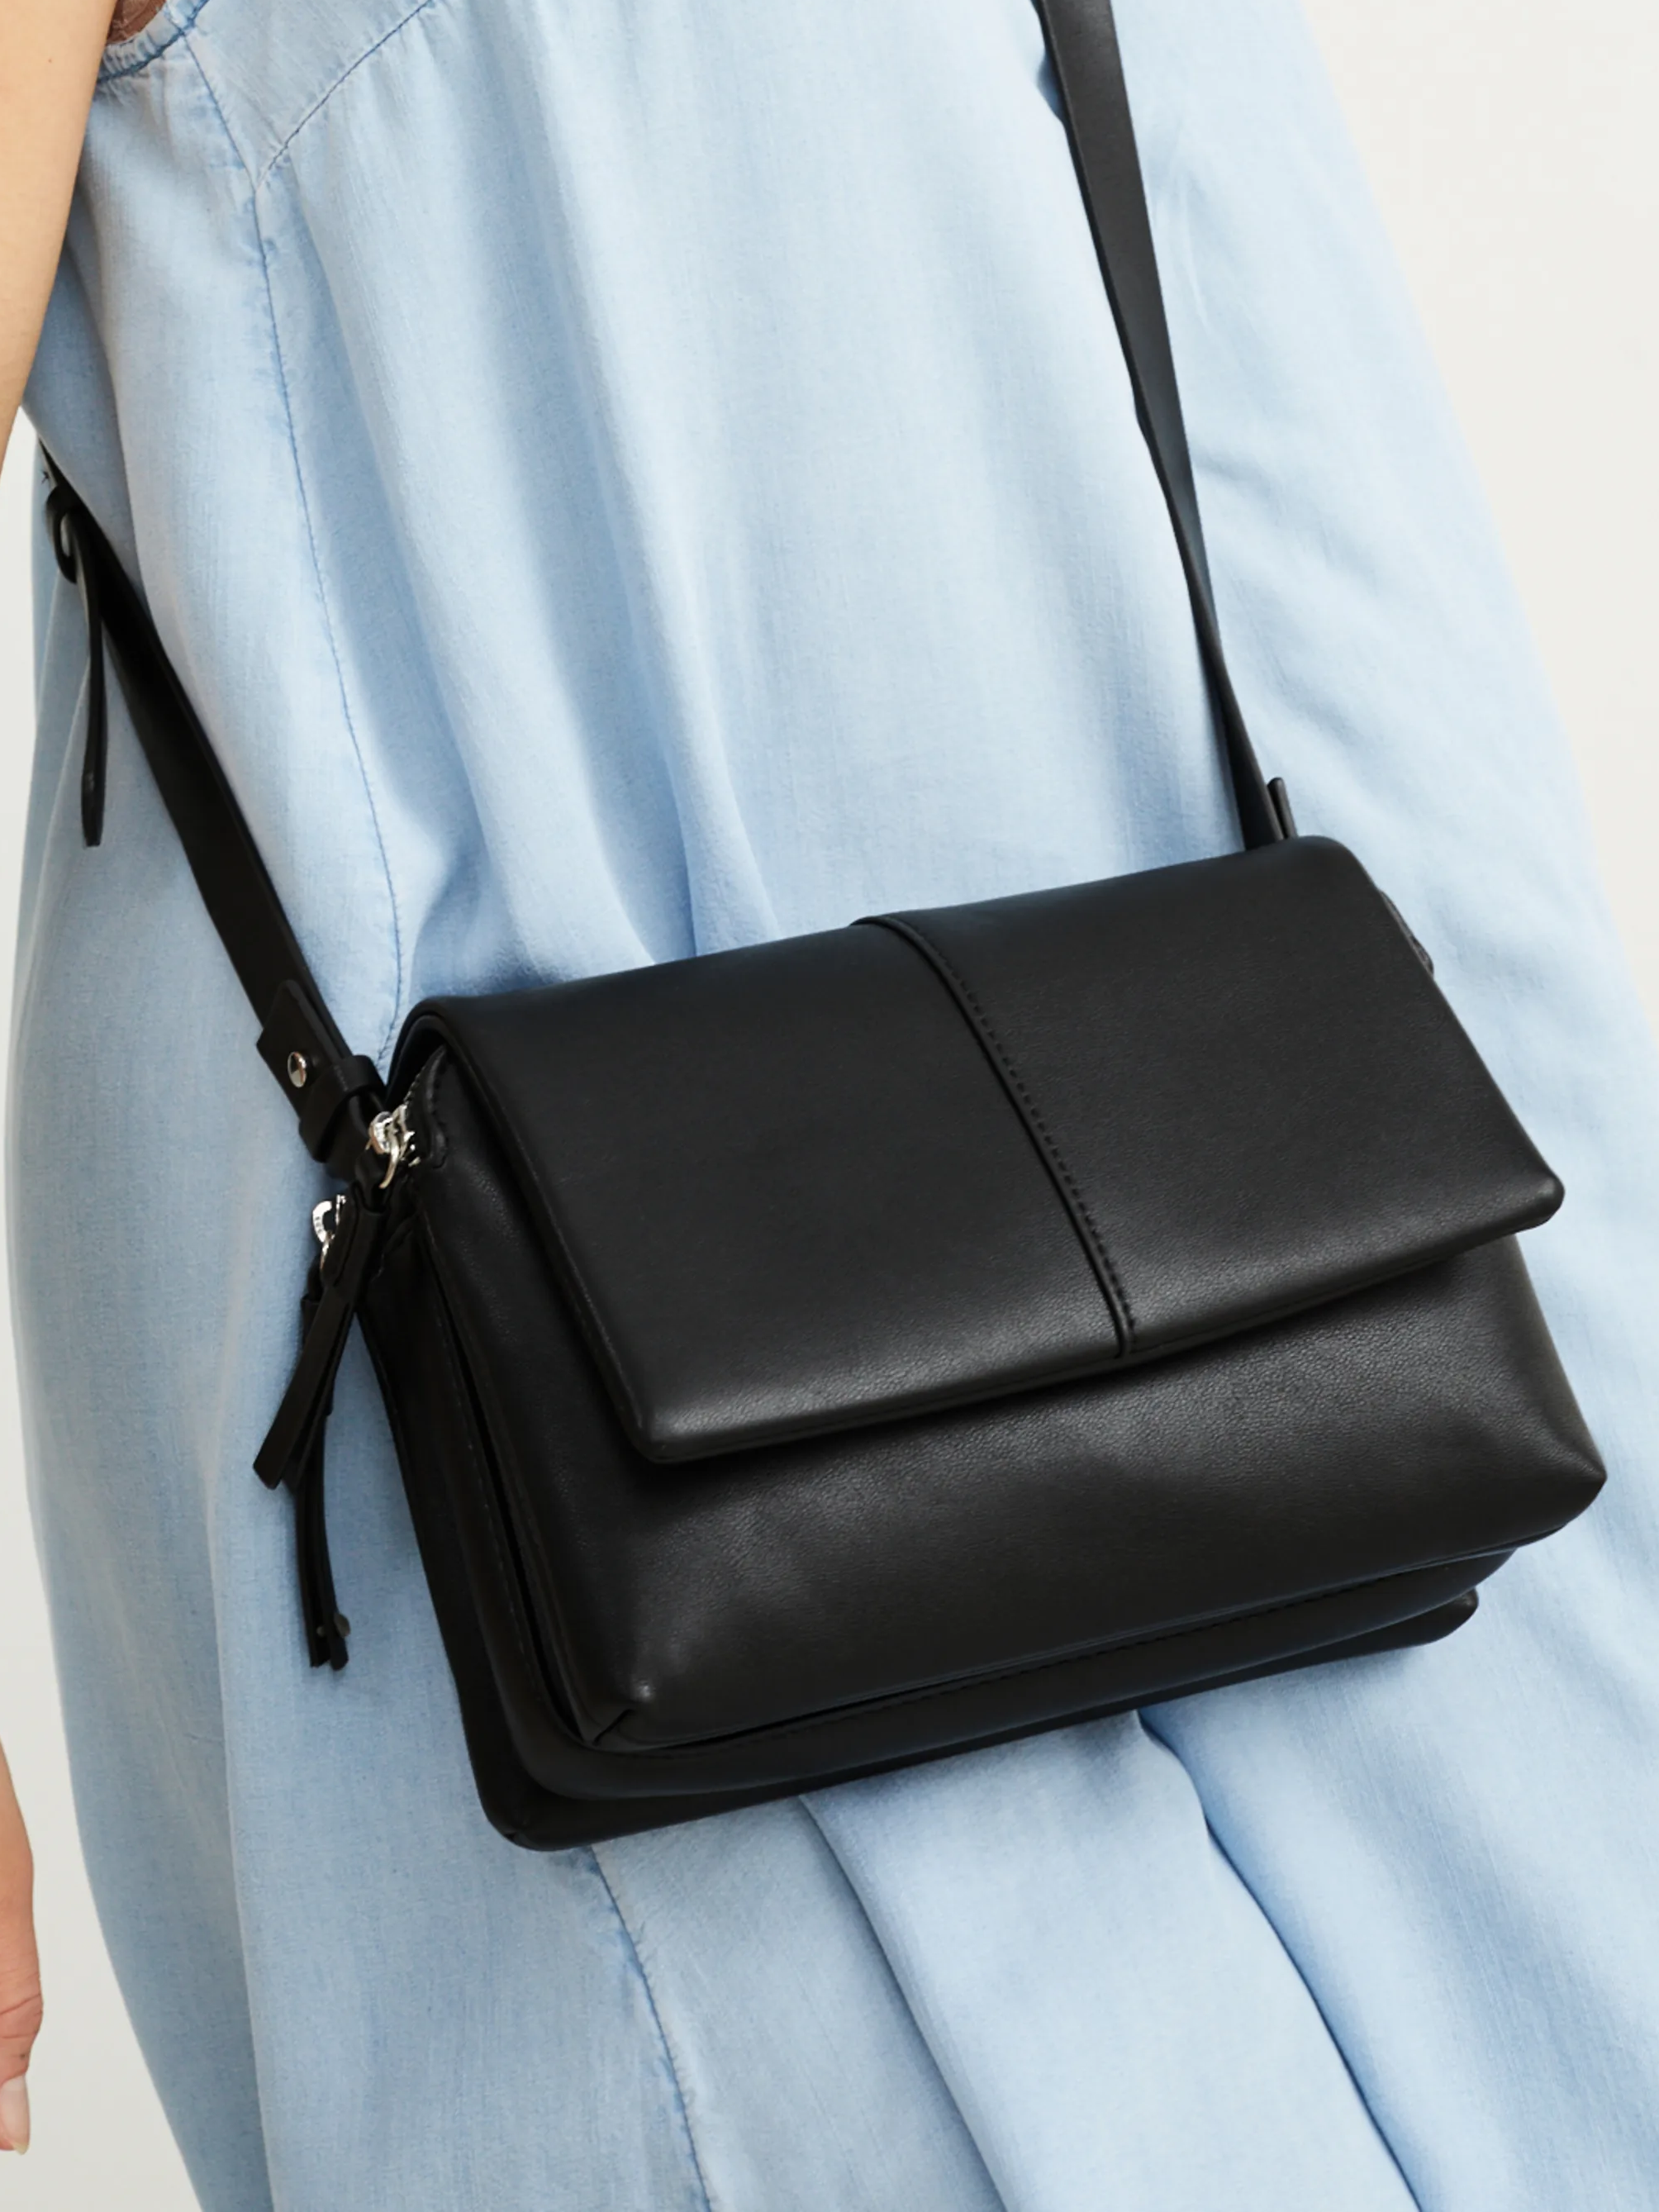 Original Leather Luxury Fashion Bag Soft Casual Shoulder Bag Medium Size